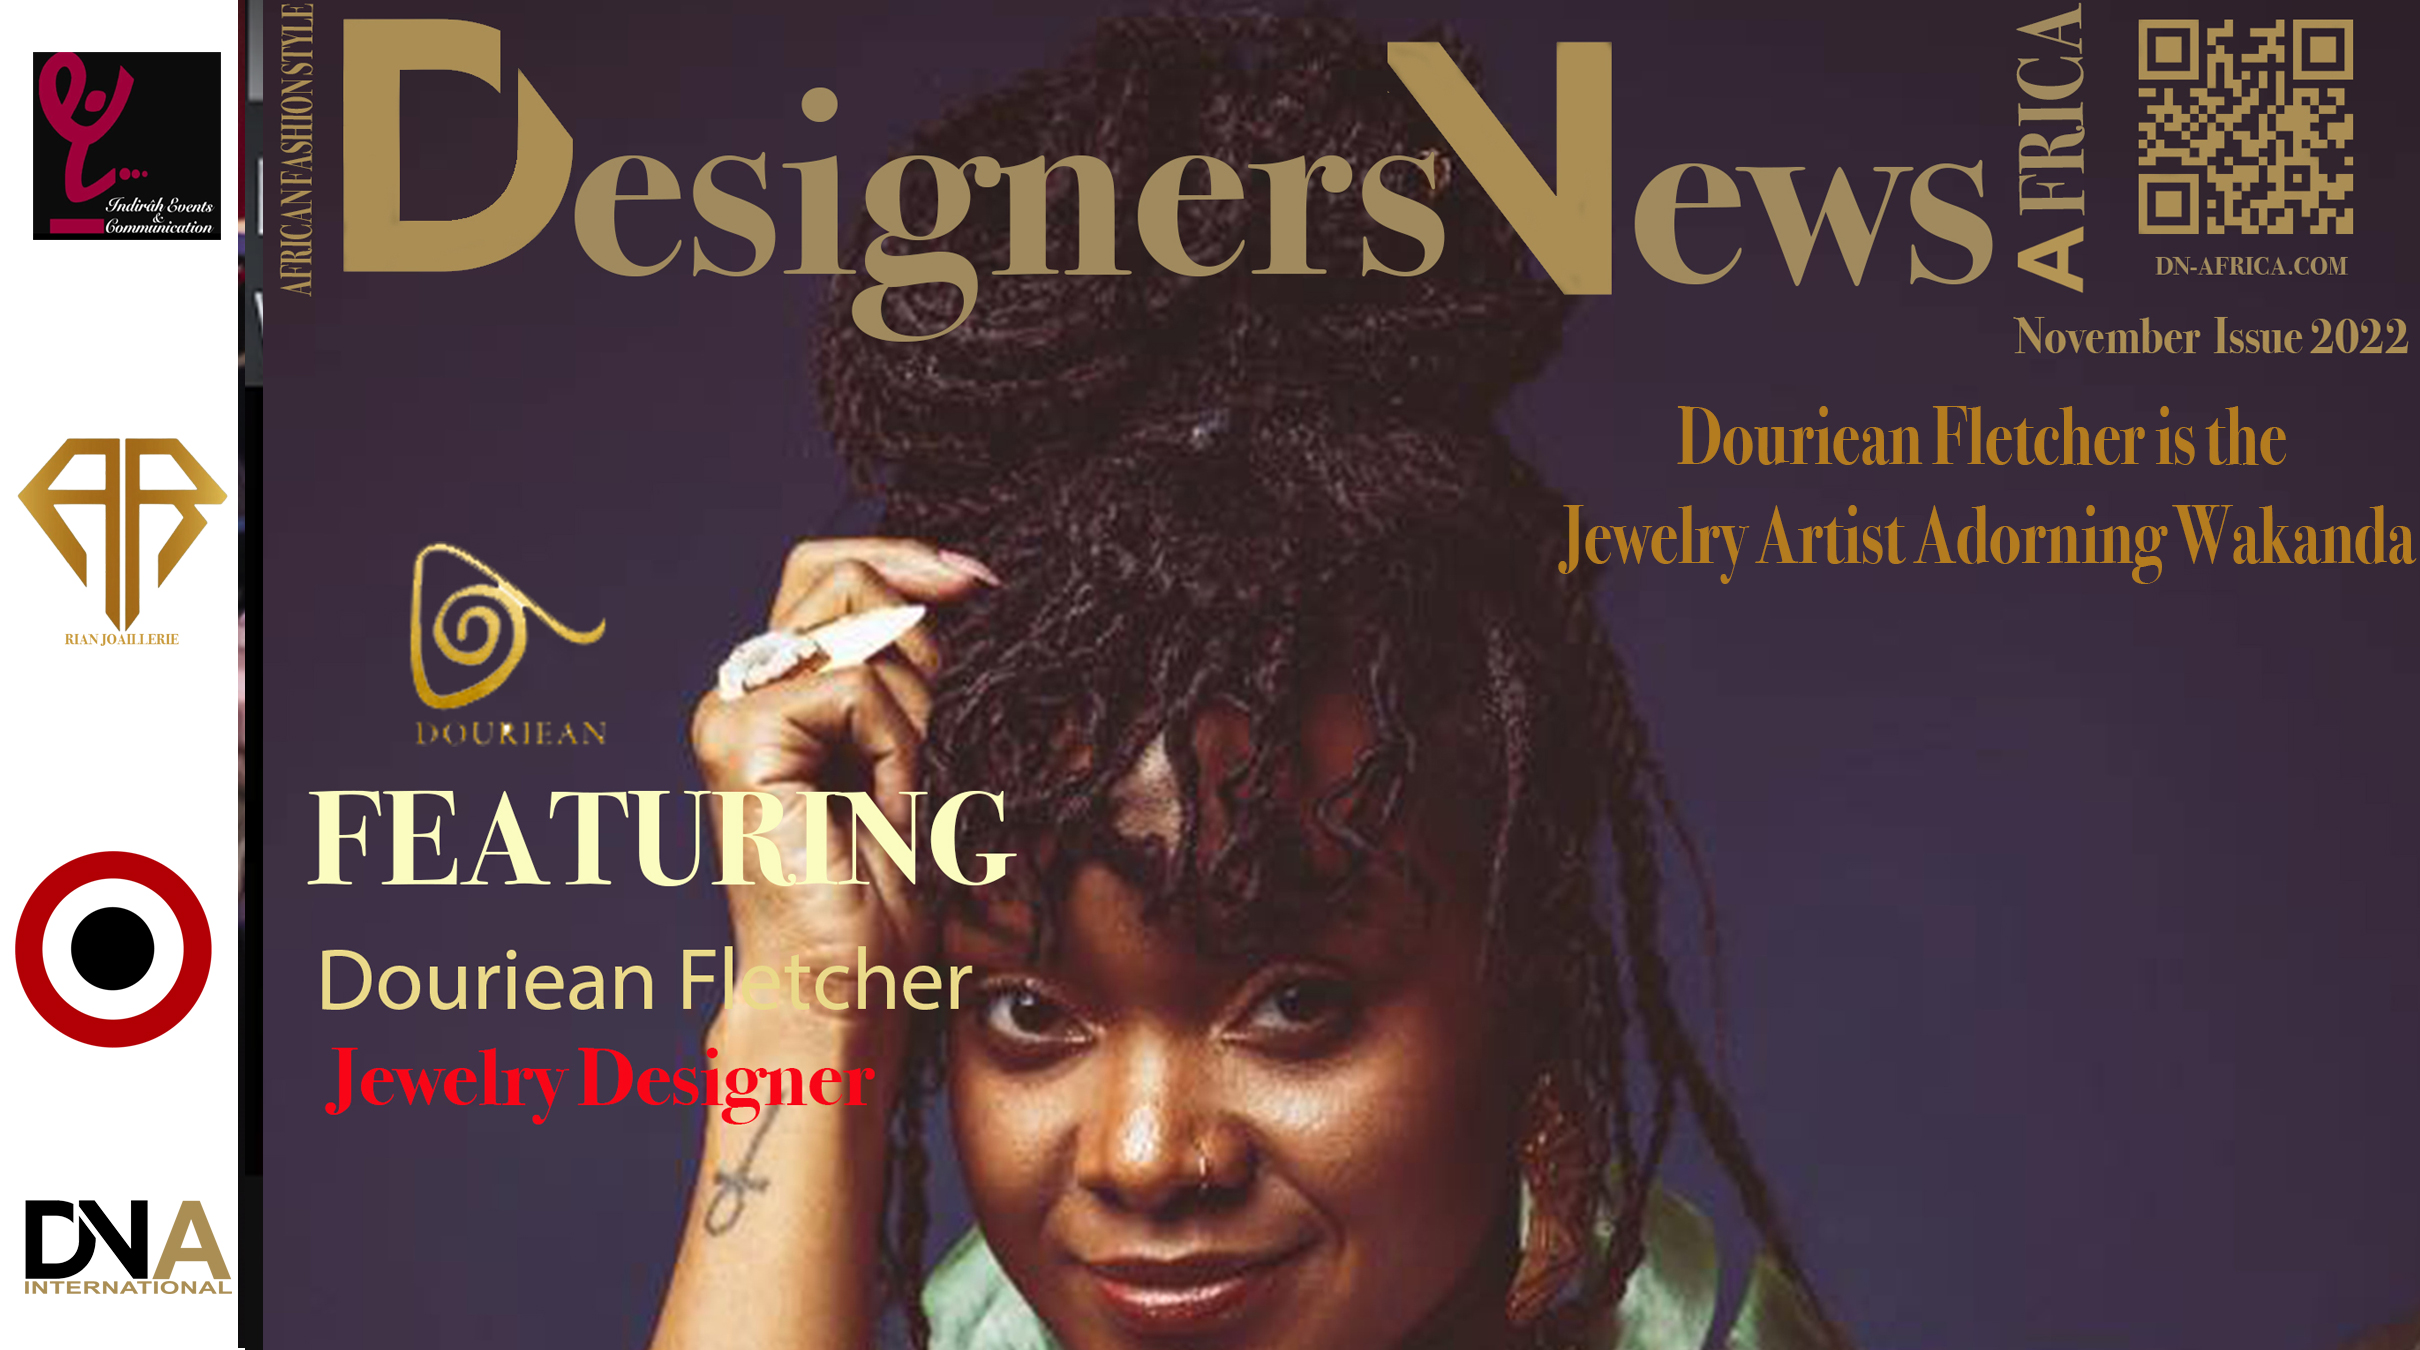 AFRICA-VOGUE-COVER-Douriean-Fletcher-is-the-Jewelry-Artist-Adorning-Wakanda-DN-AFRICA-Media-Partner